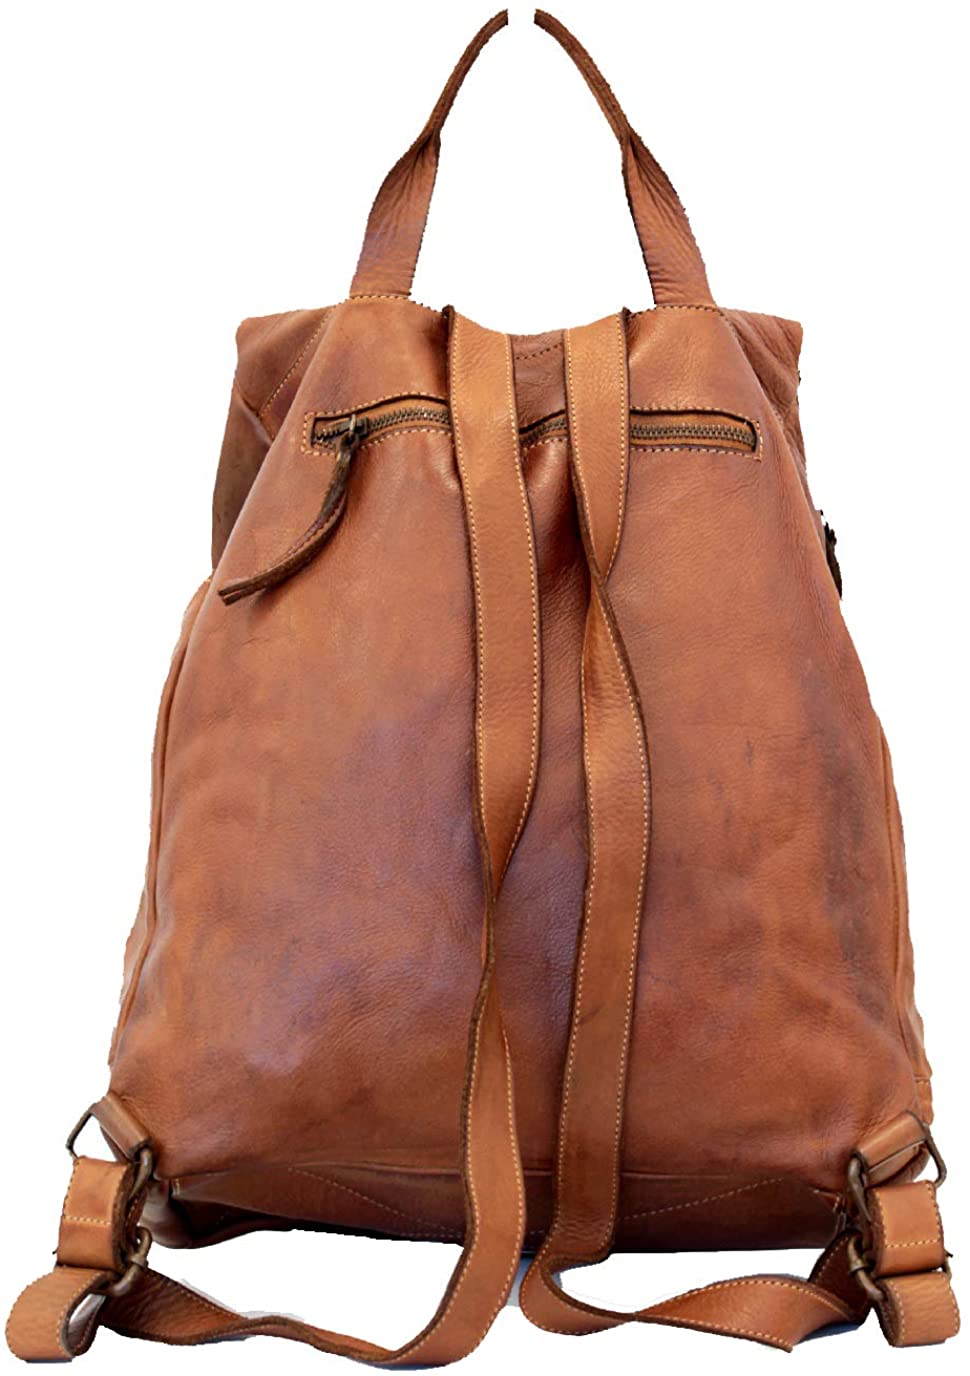 BZNA Bag Rinalto braun moro Italy Rucksack Backpacker Designer Tasche Handtasche Schultertasche Leder Damen Neu